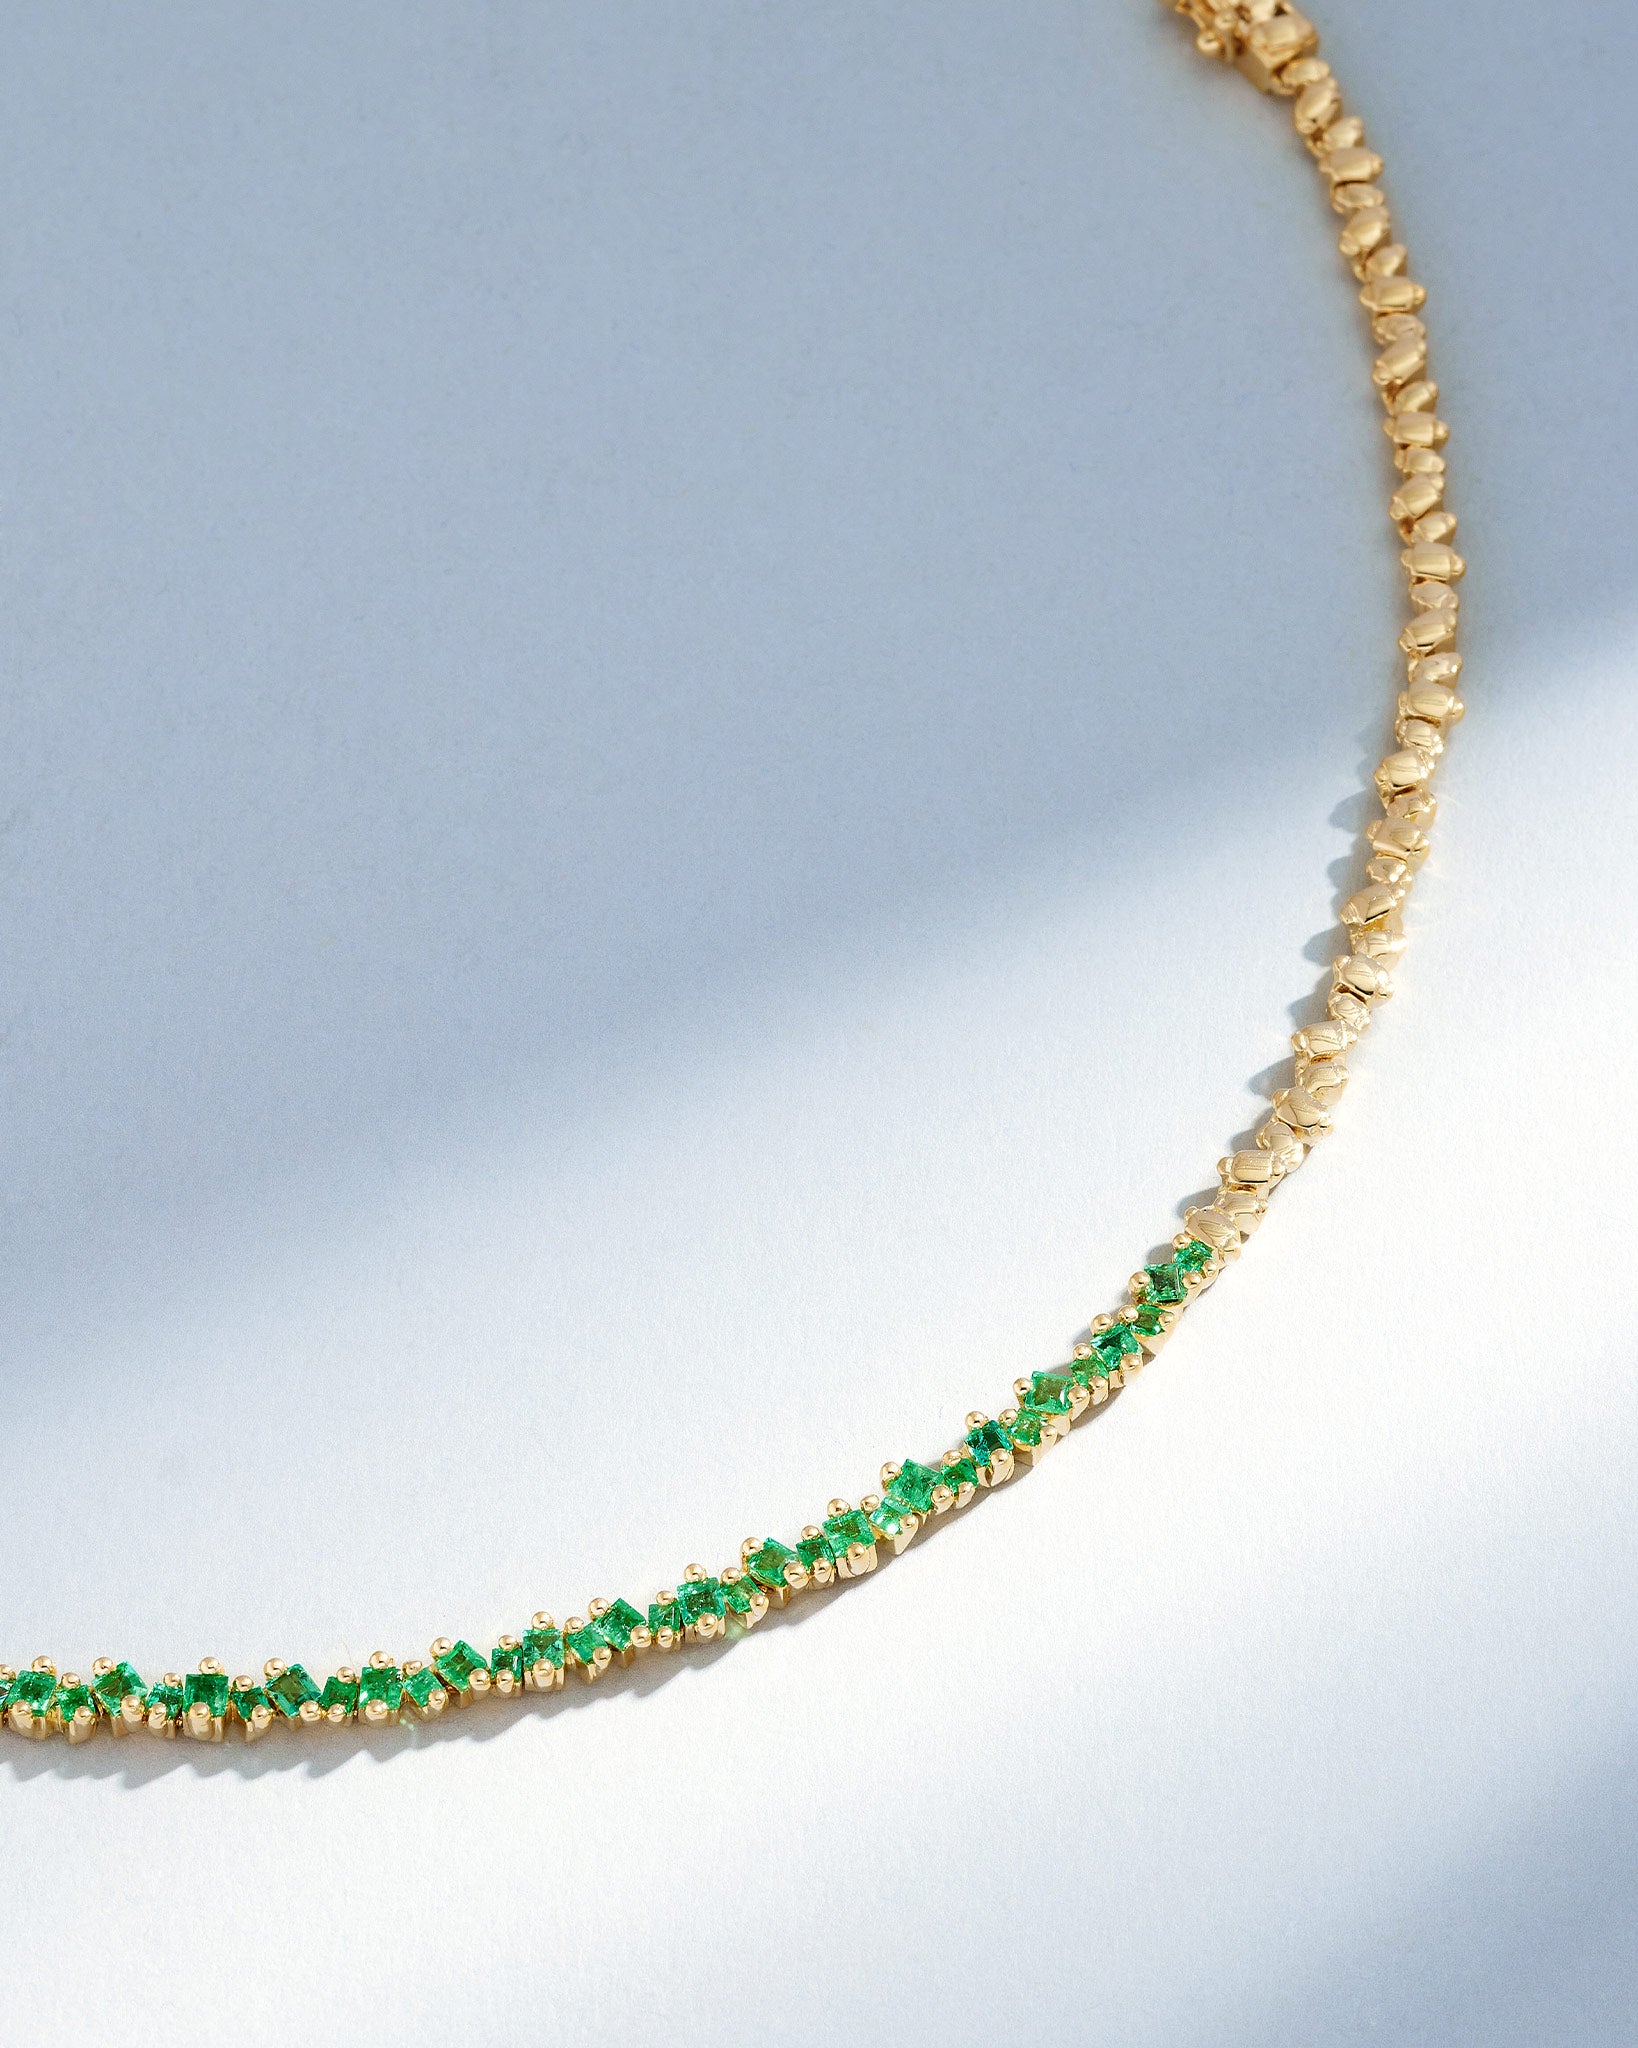 Suzanne Kalan La Fantaisie Cosmic Emerald Tennis Necklace in 18k yellow gold